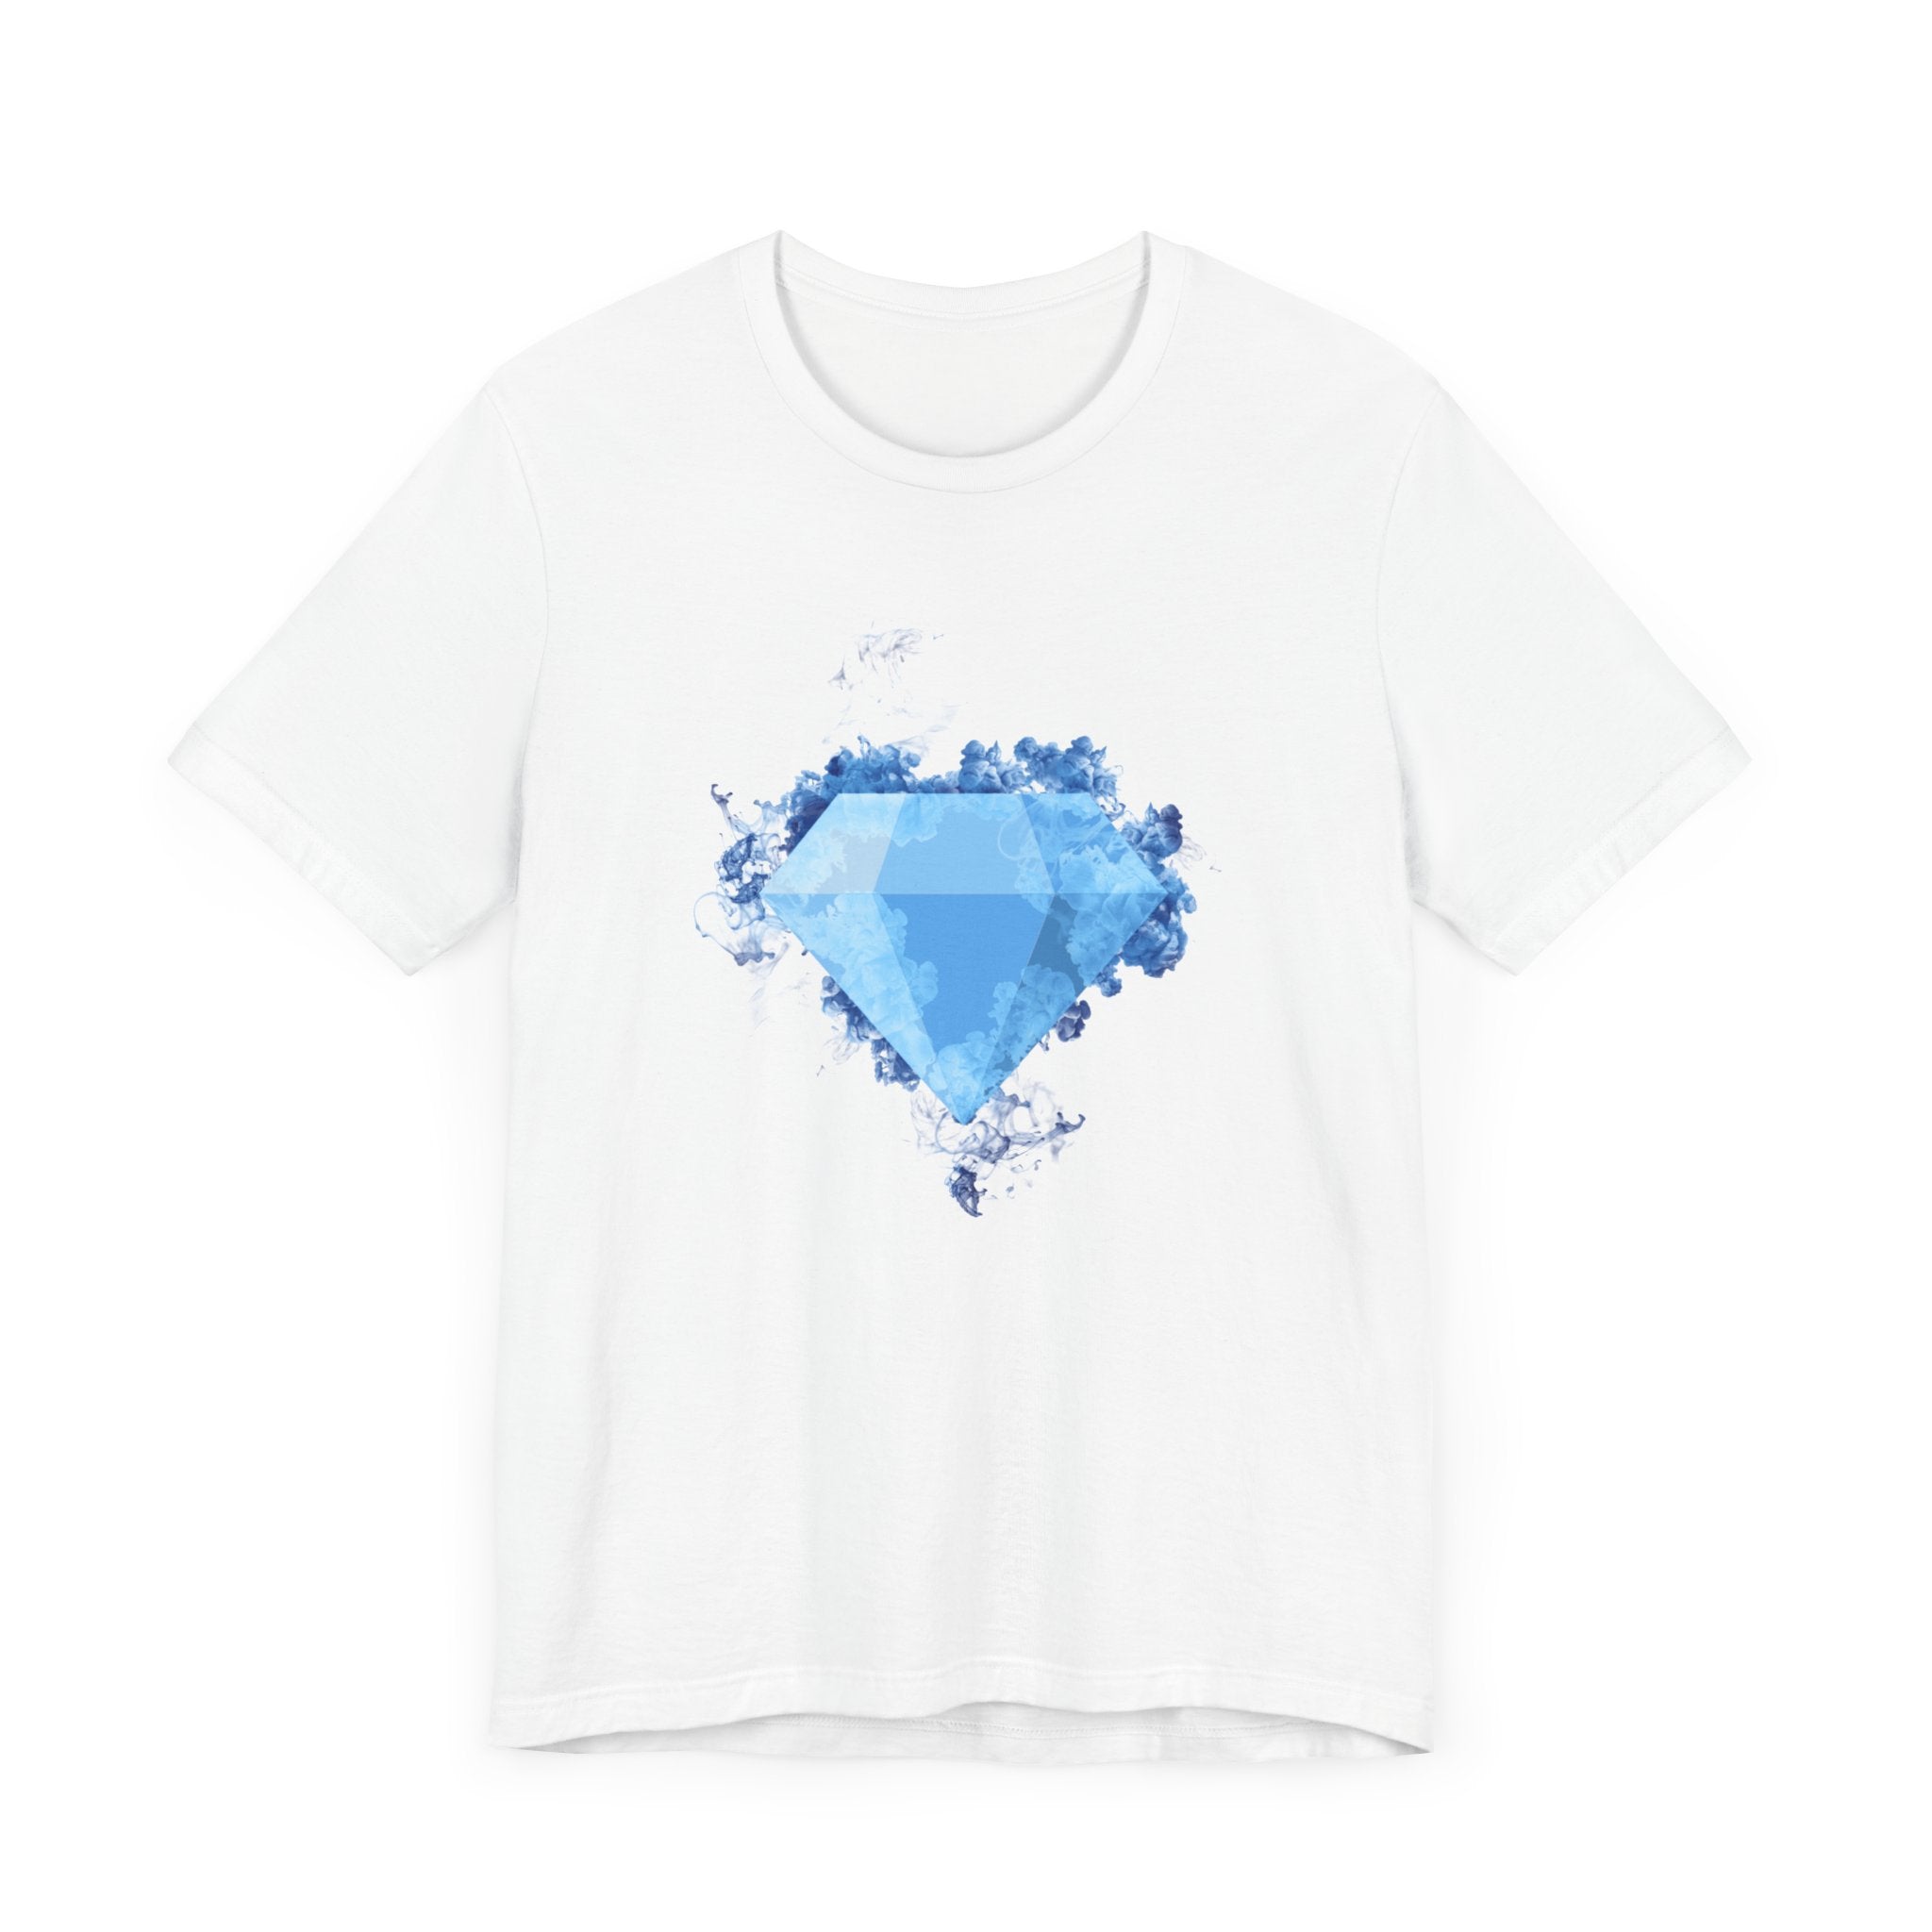 Blue Diamond T-Shirt - Modern Gemstone Graphic Tee